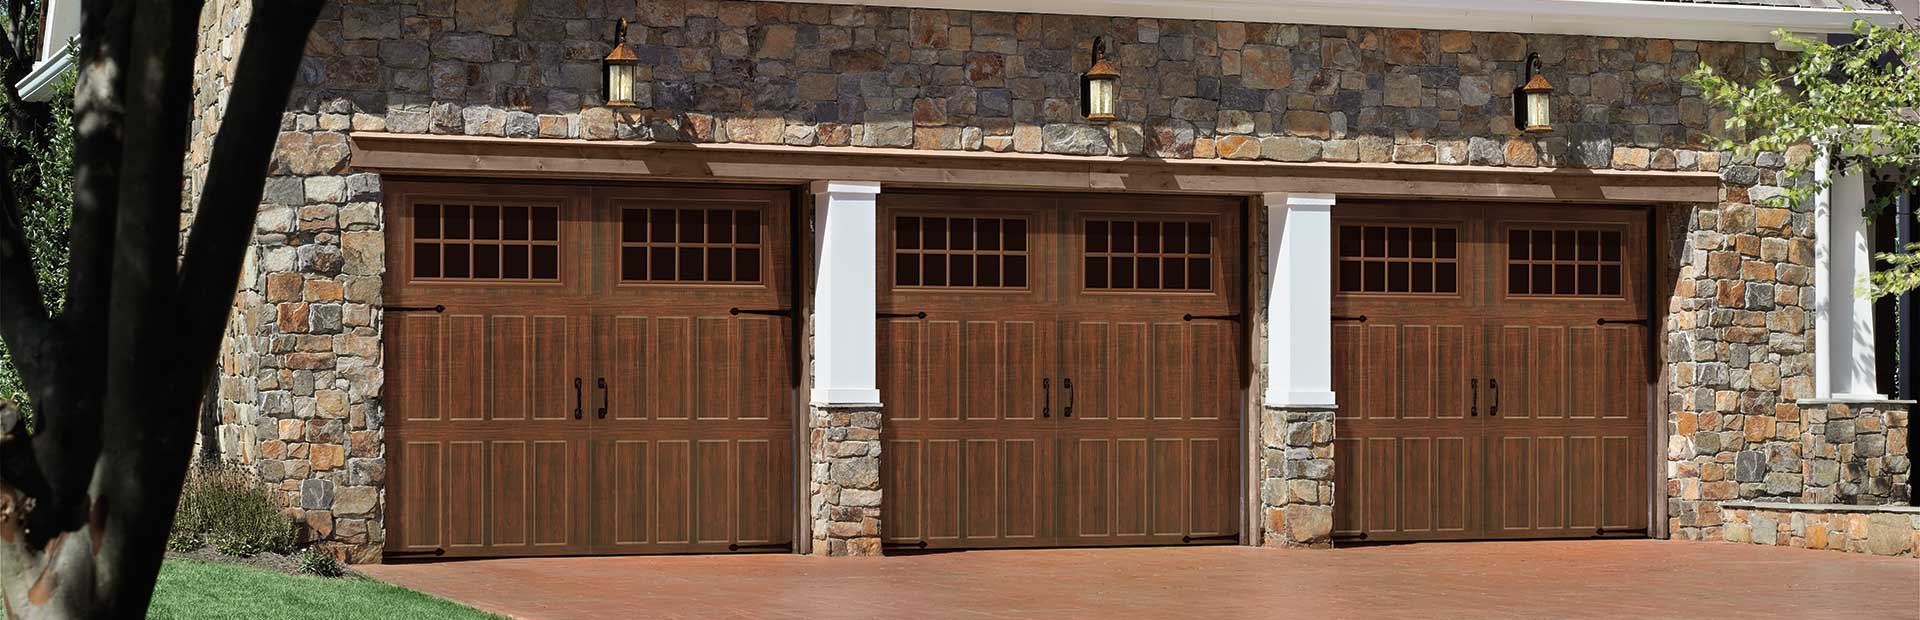 Garage Doors to Consider for Your Denver Home